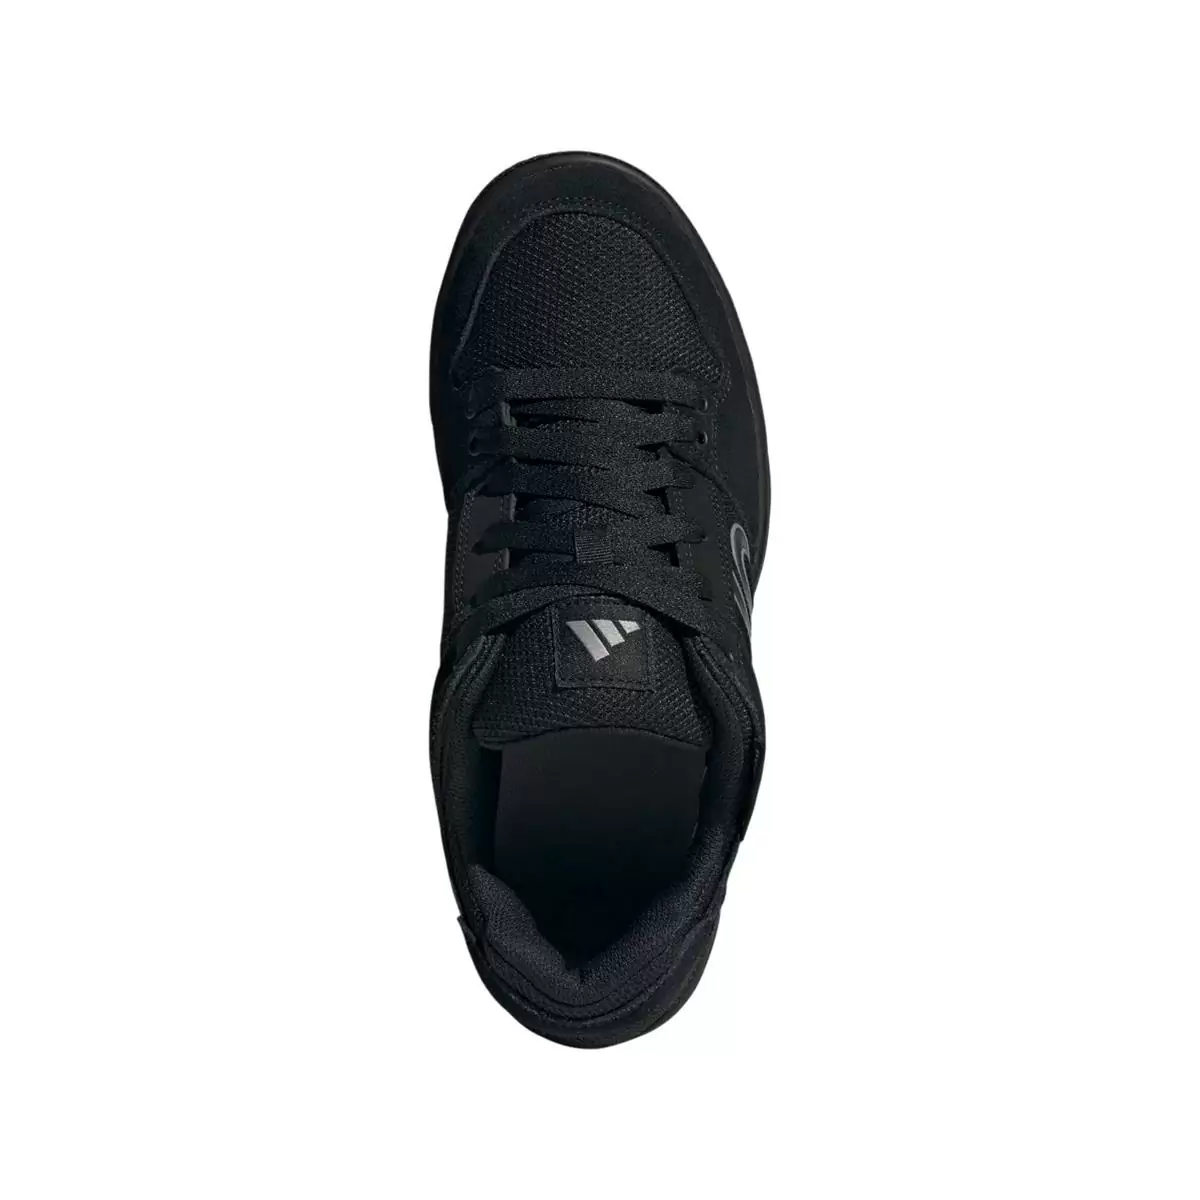 Chaussures VTT Flat Freerider Noir Taille 44,5 #1